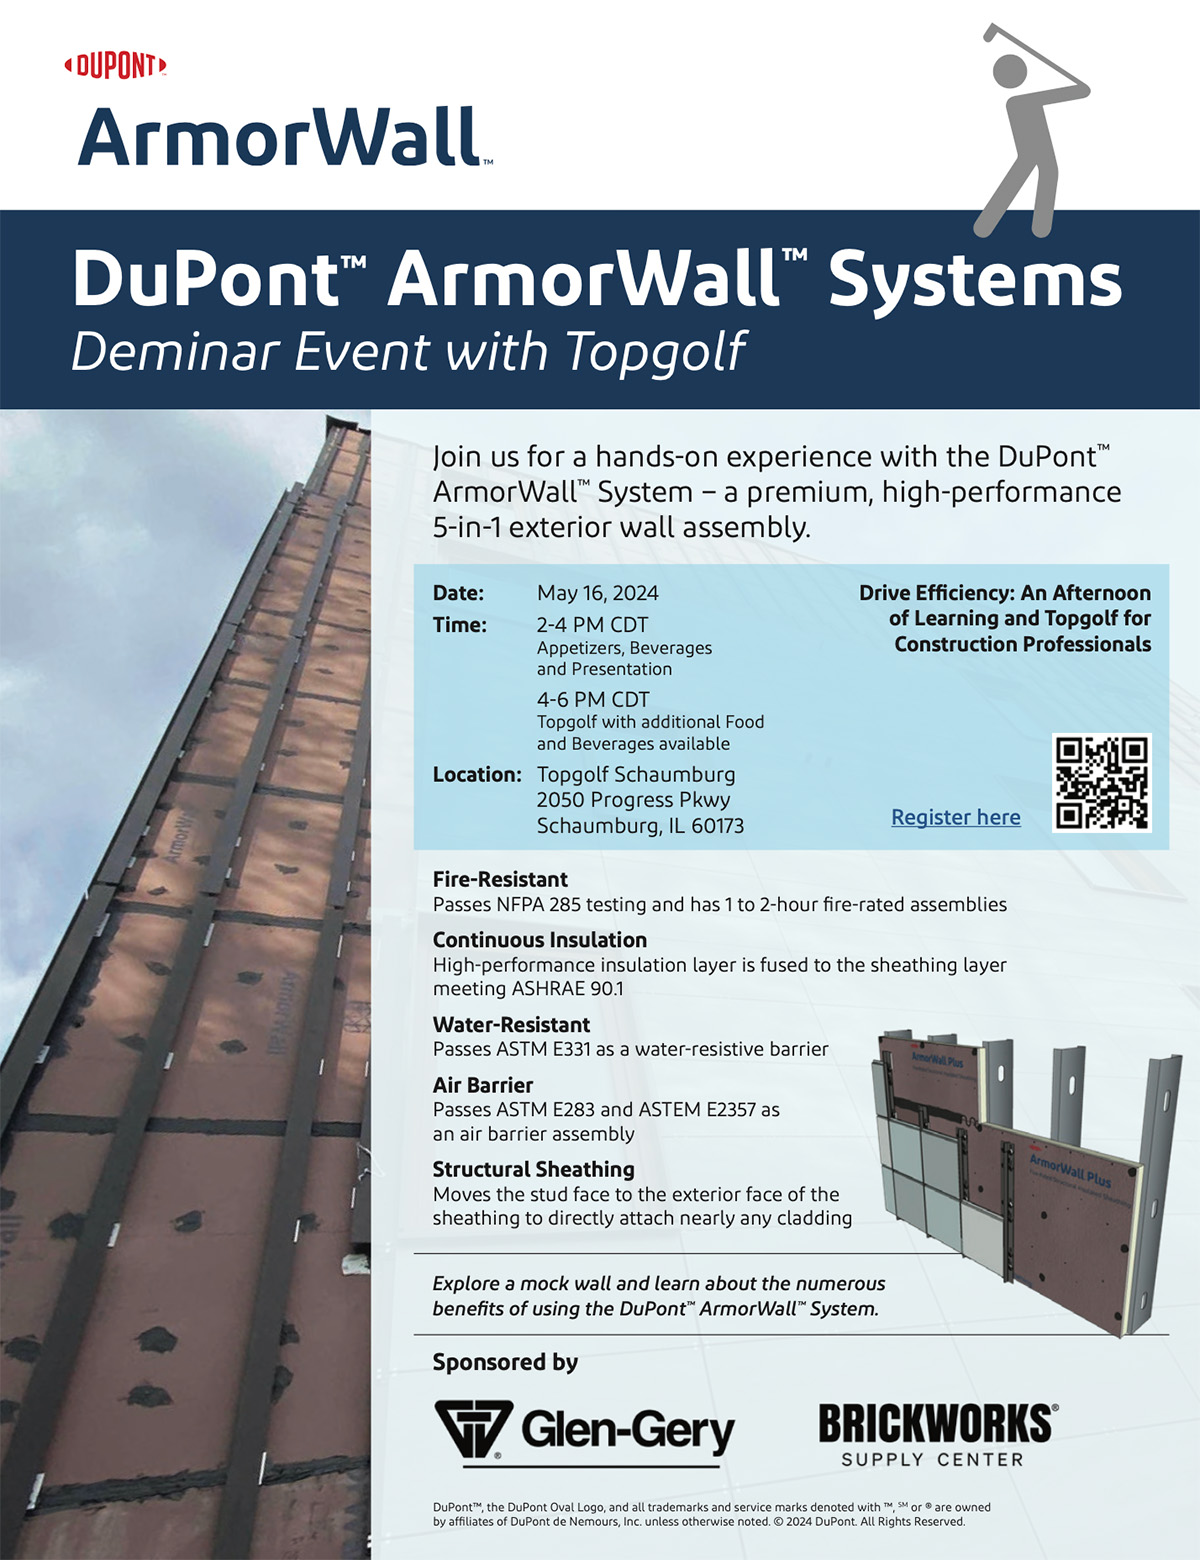 dupont armorwall training demo topgolf event